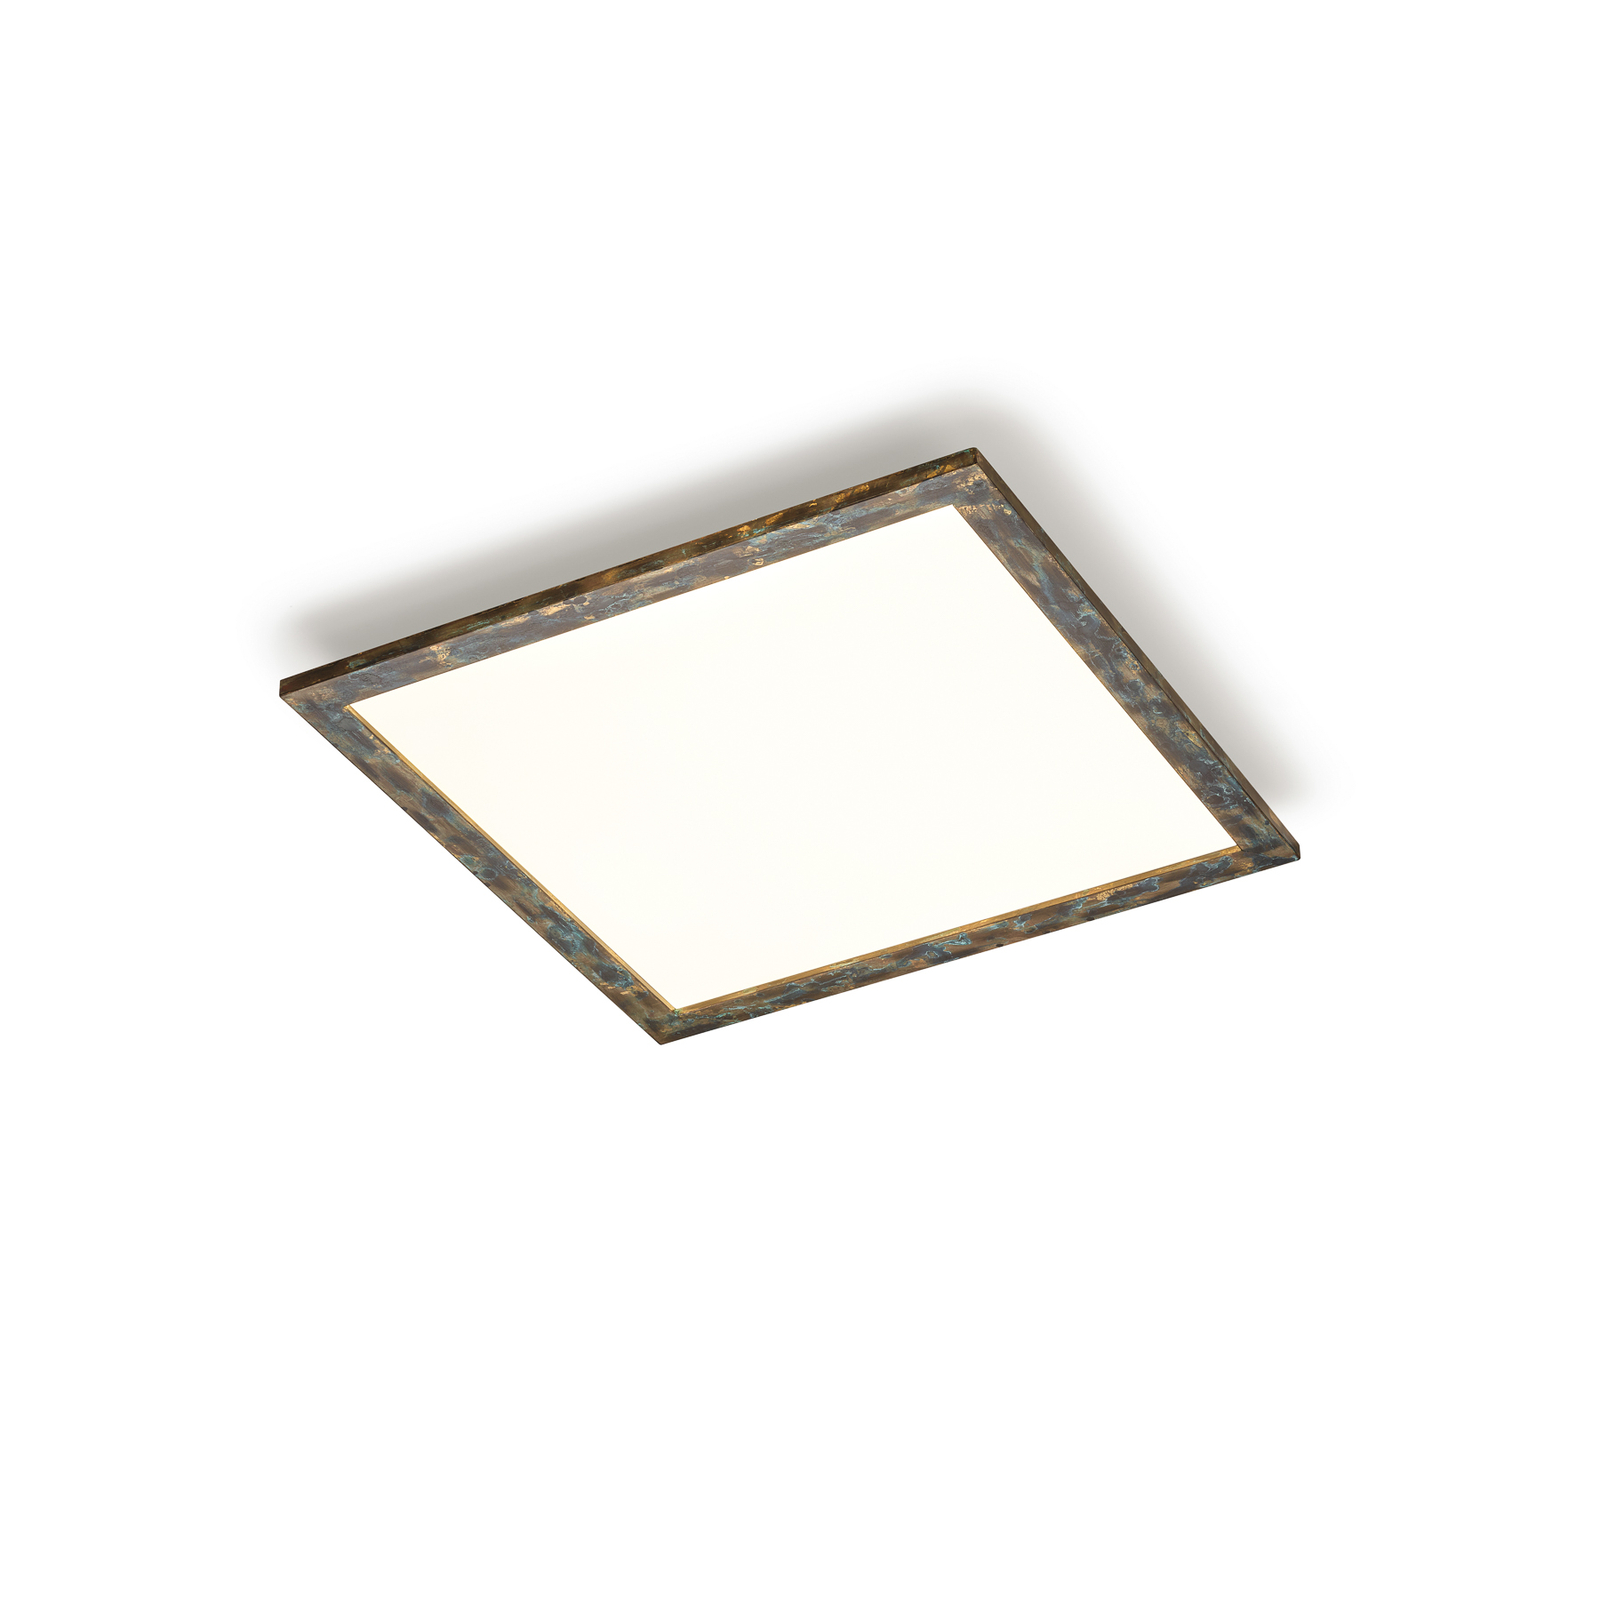 Quitani Aurinor LED panel, aranyszínű patina, 68 cm